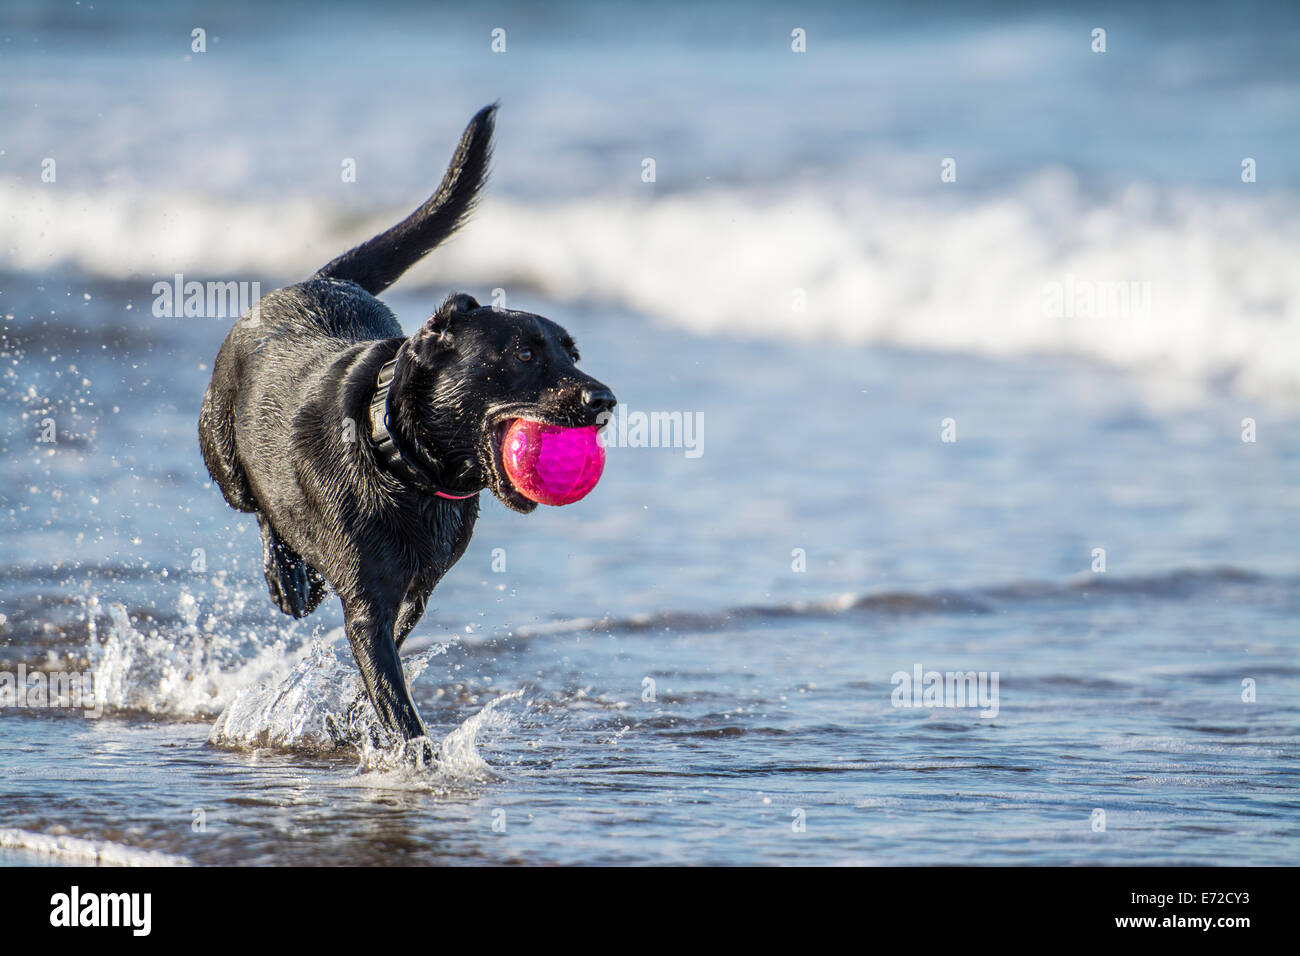 Black labrador dog running towards camera in the sea carrying a ball Stock Photo